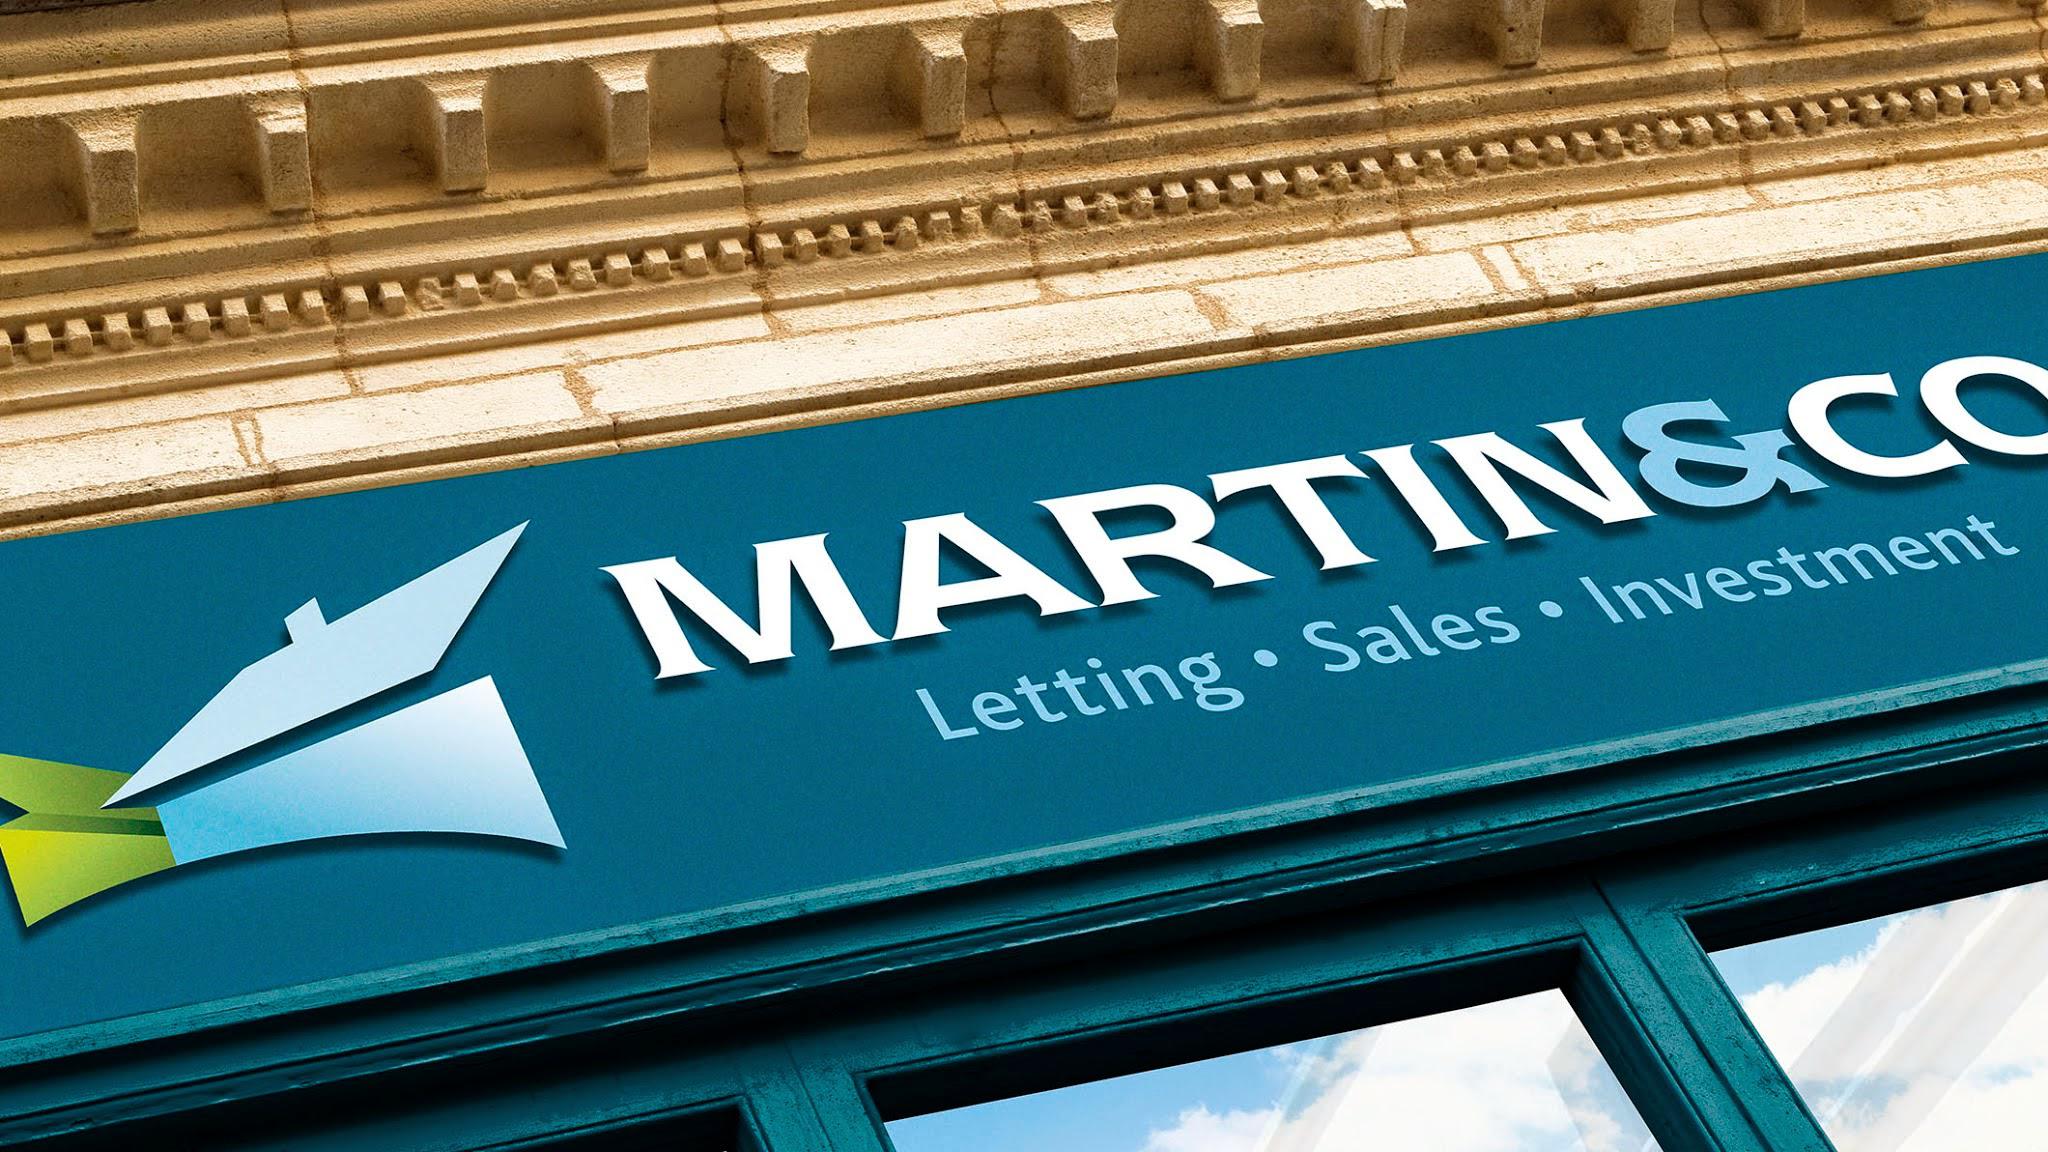 Images Martin & Co Cupar Lettings & Estate Agents